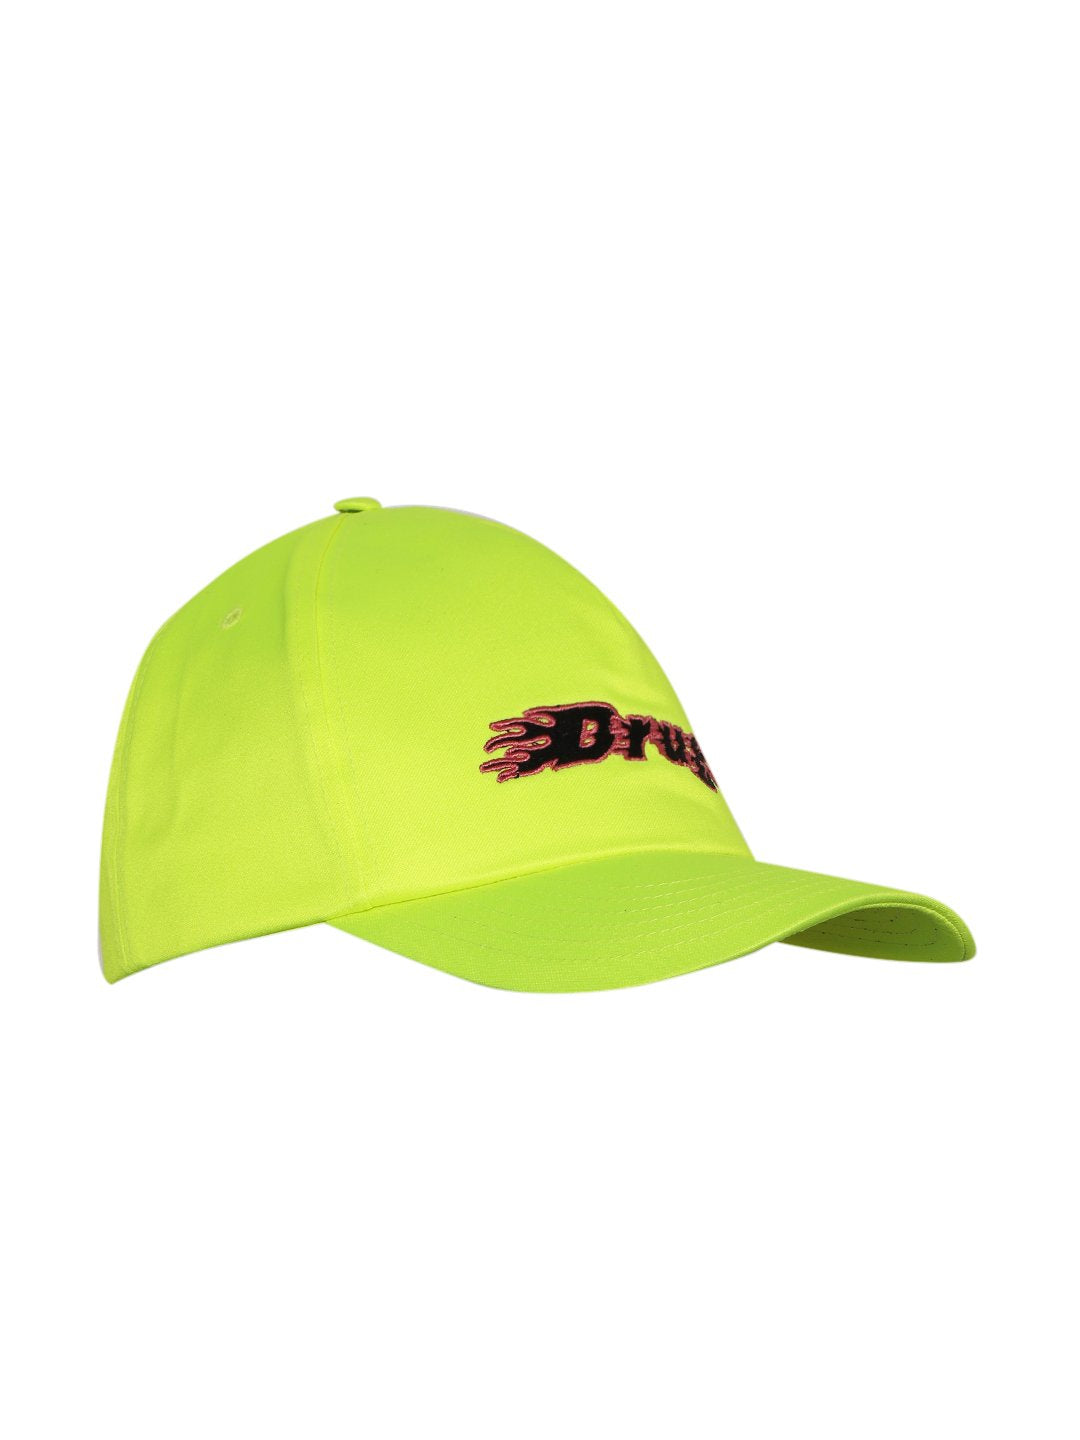 Lazy panda Unisex Lime Green cap drugs embroidery baseball cap